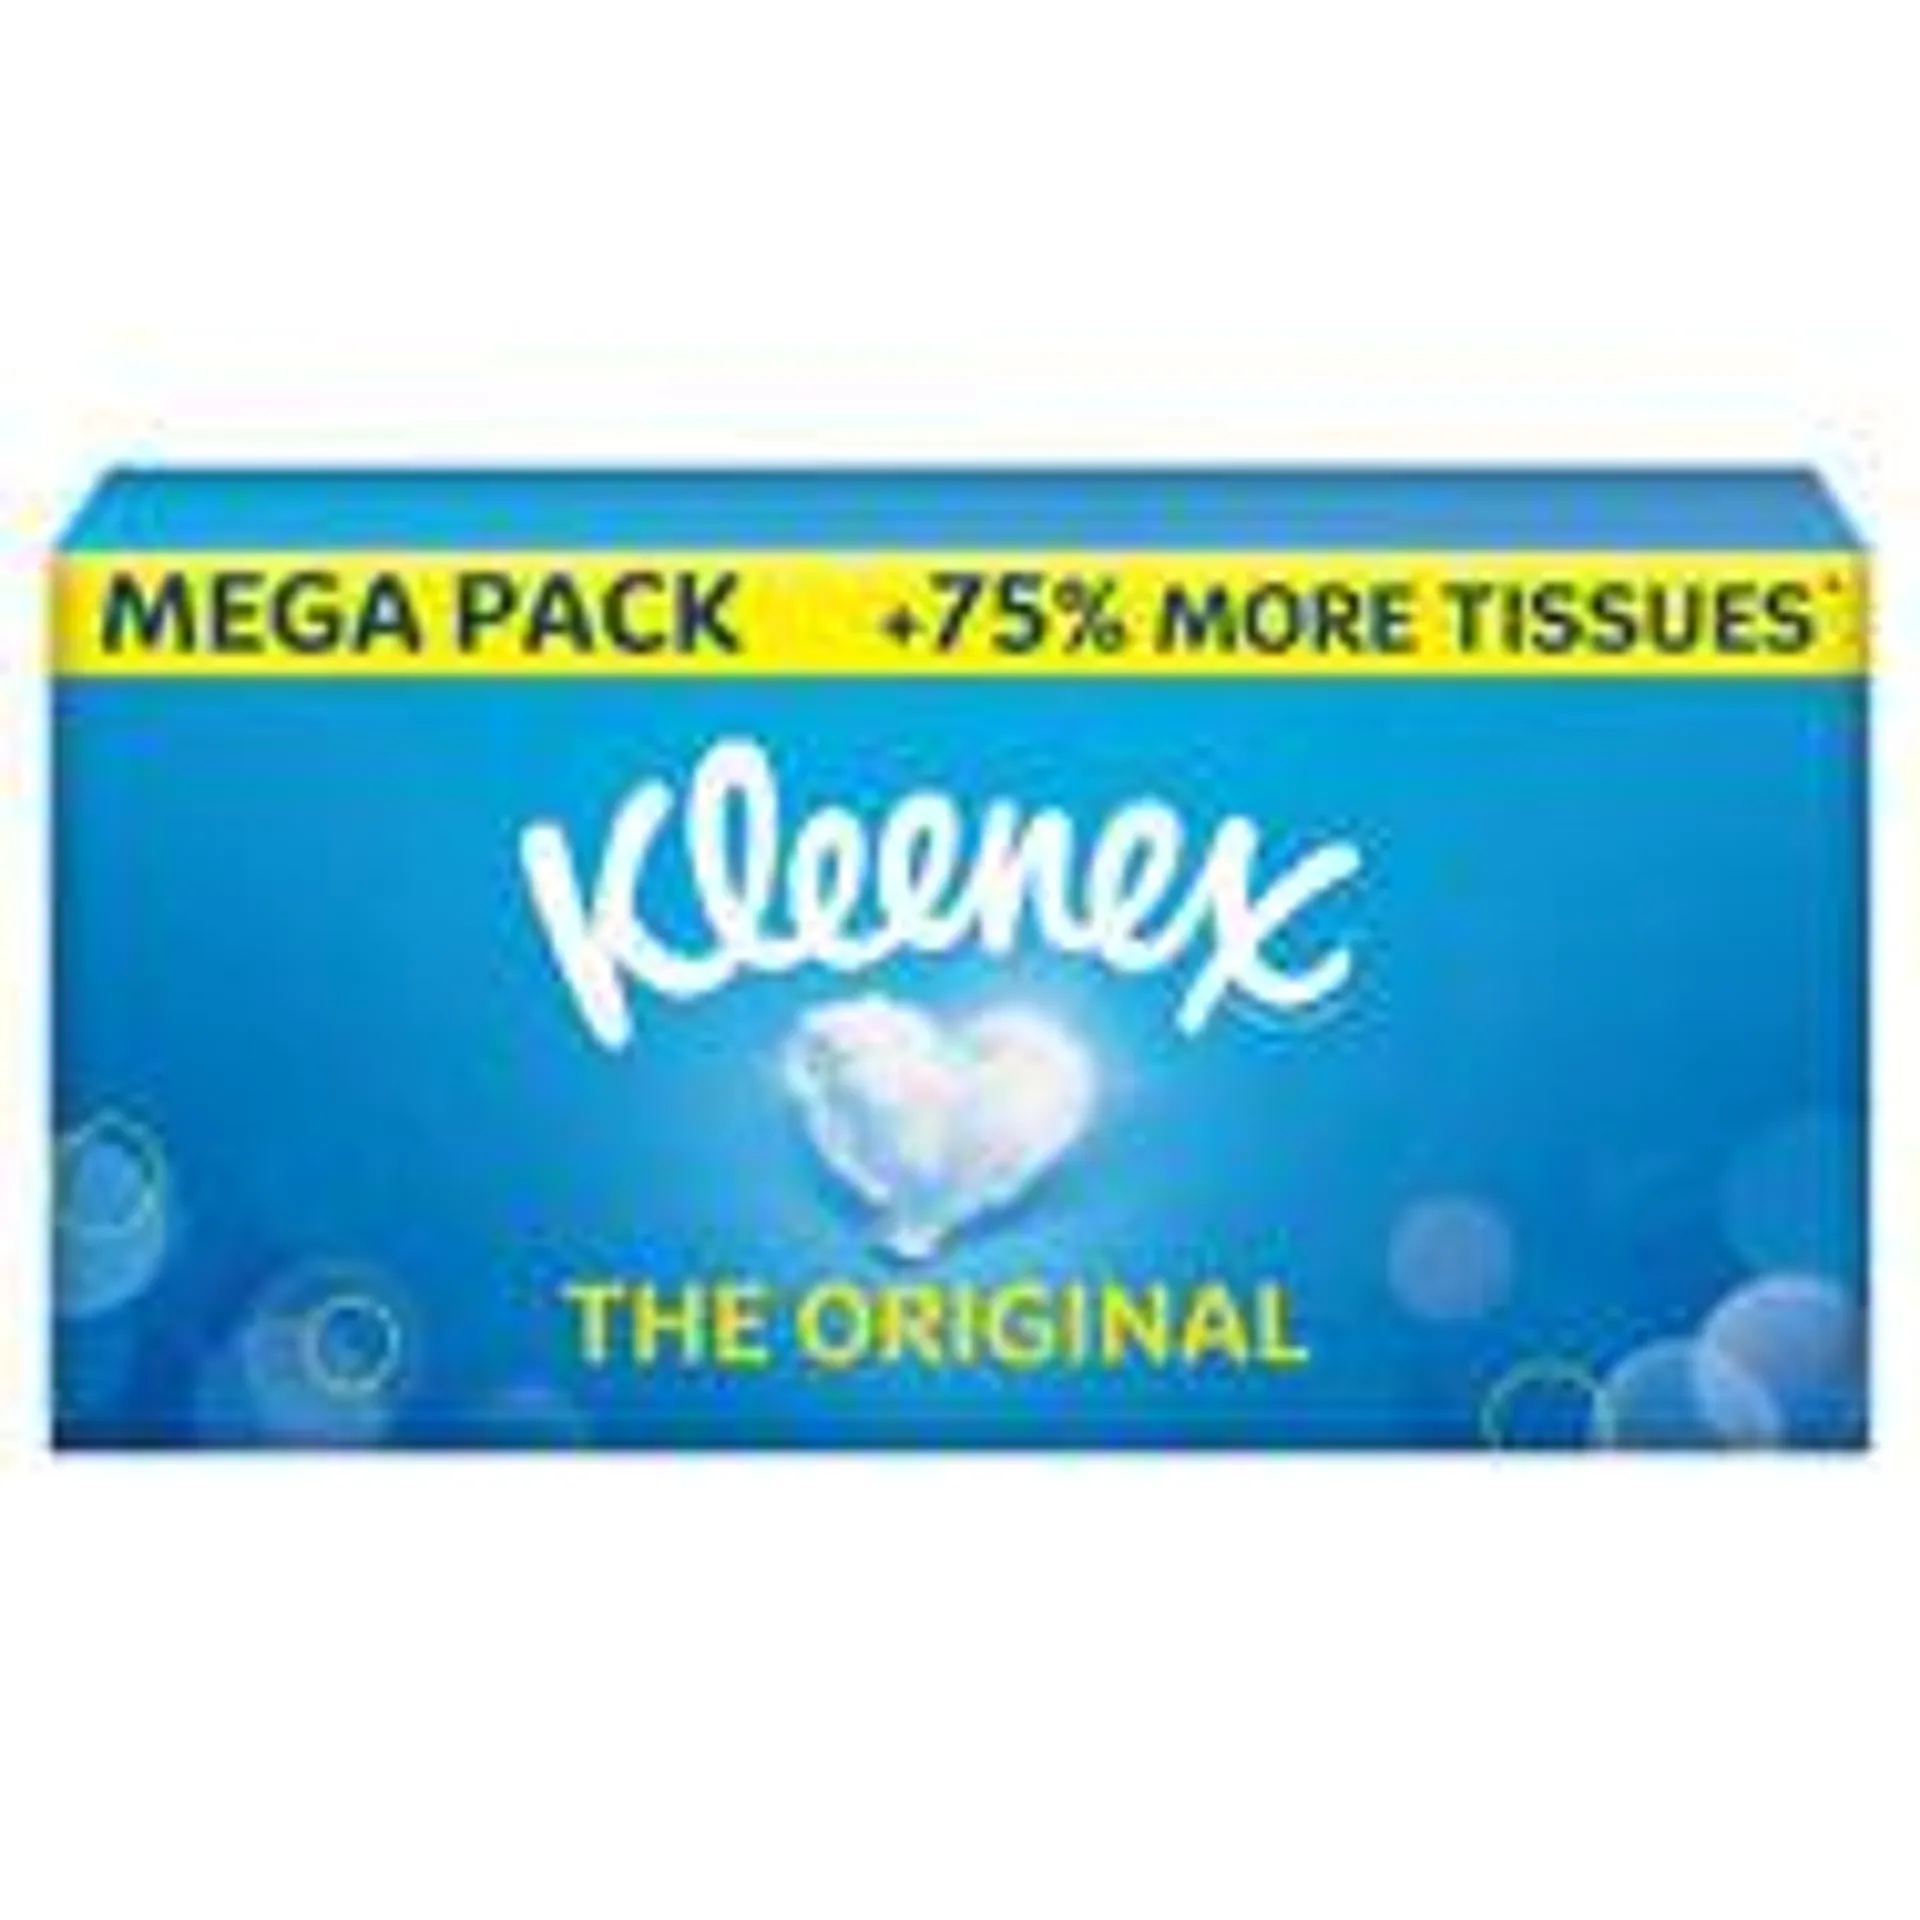 Kleenex Original Tissues MEGA Pack - 75% More Tissues